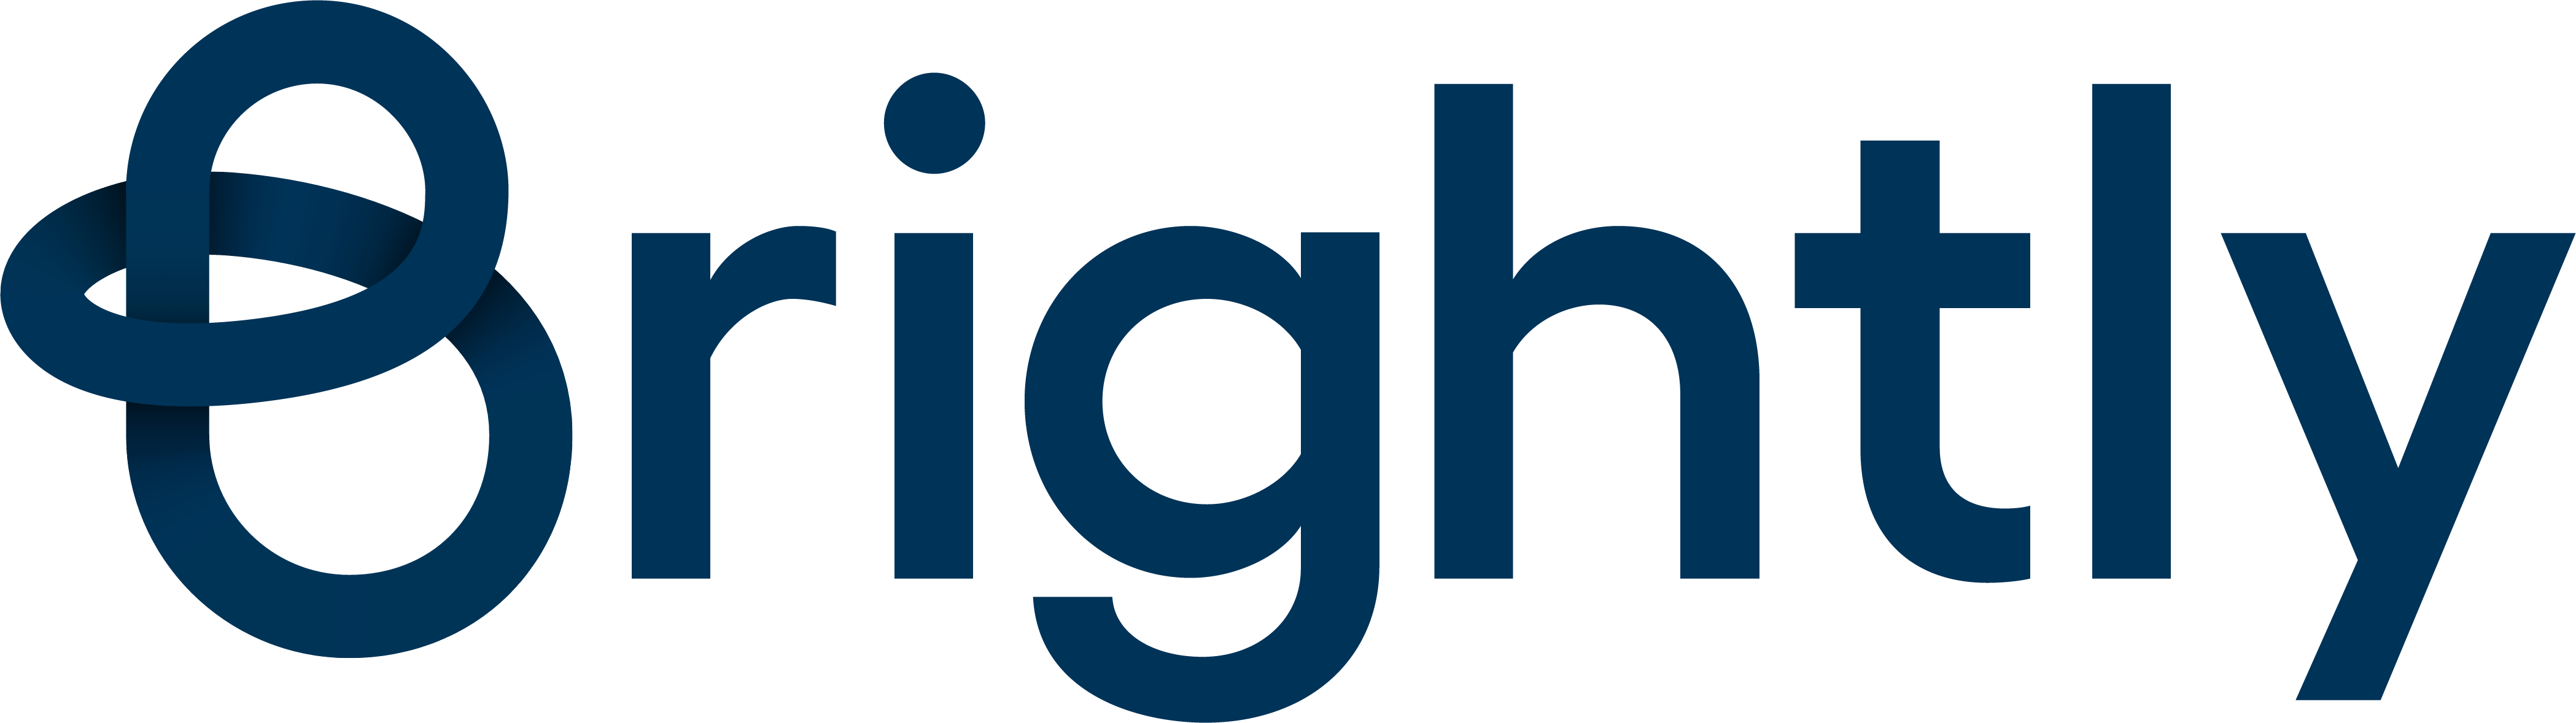 TheWorxHub logo